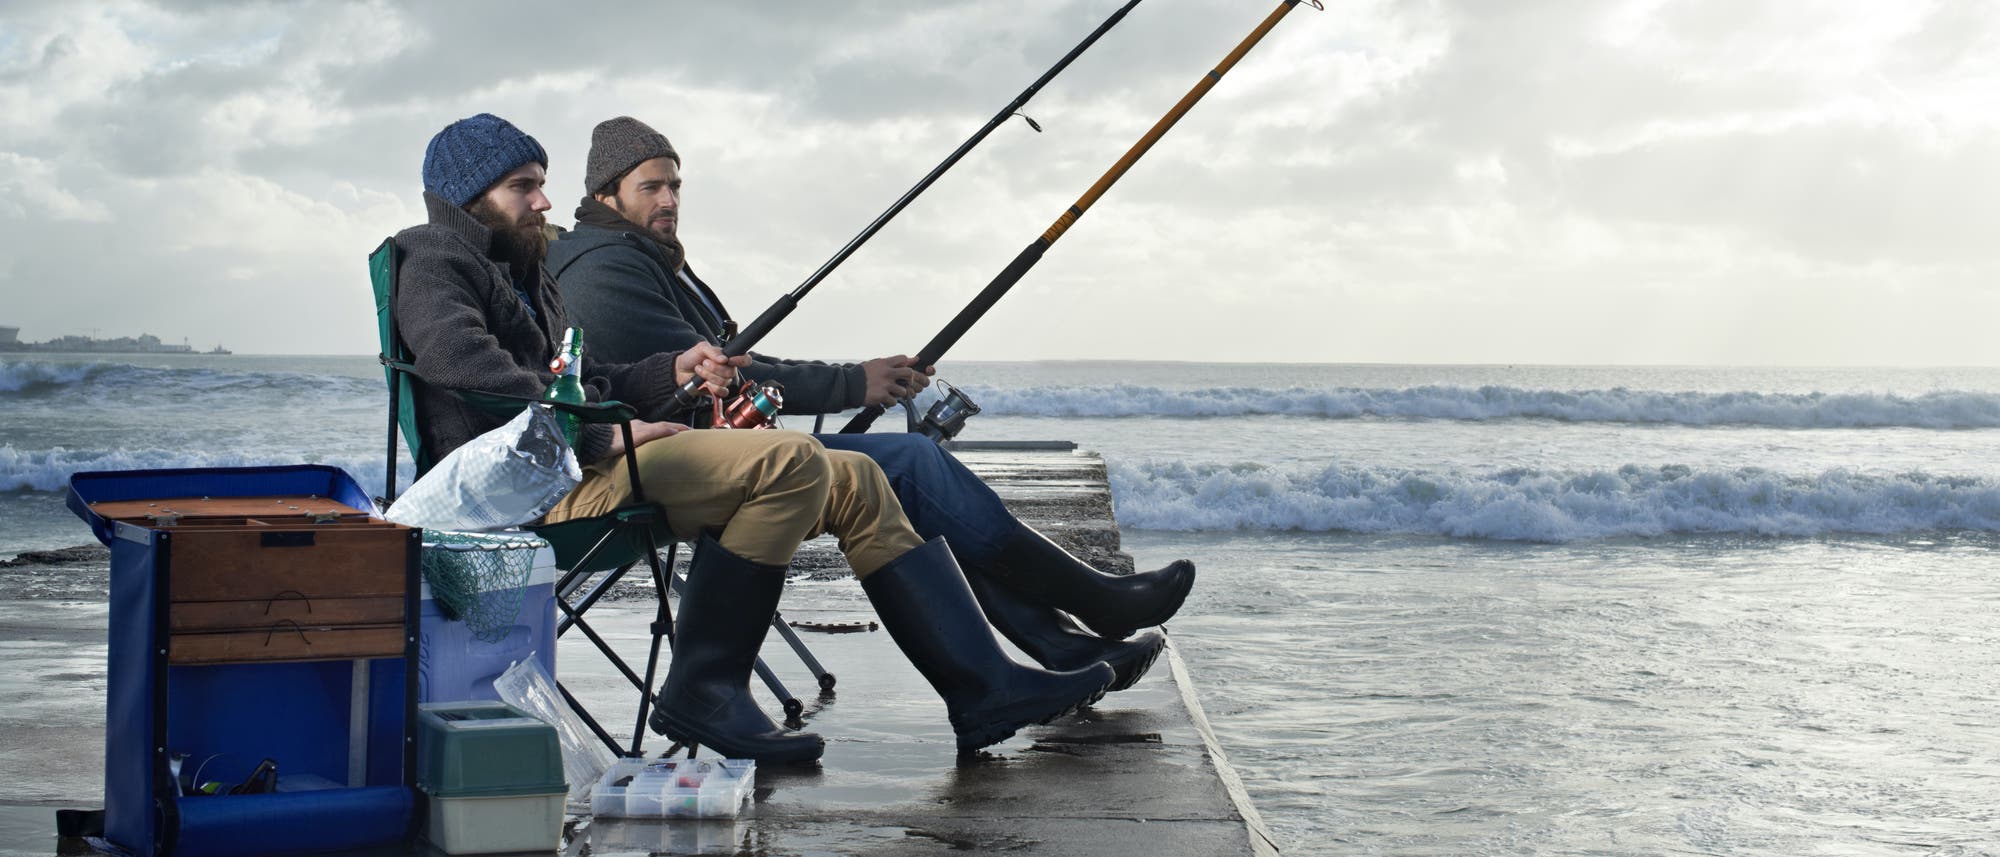 Zwei junge Männer angeln am Meer unter wolkenverhangenem Himmel